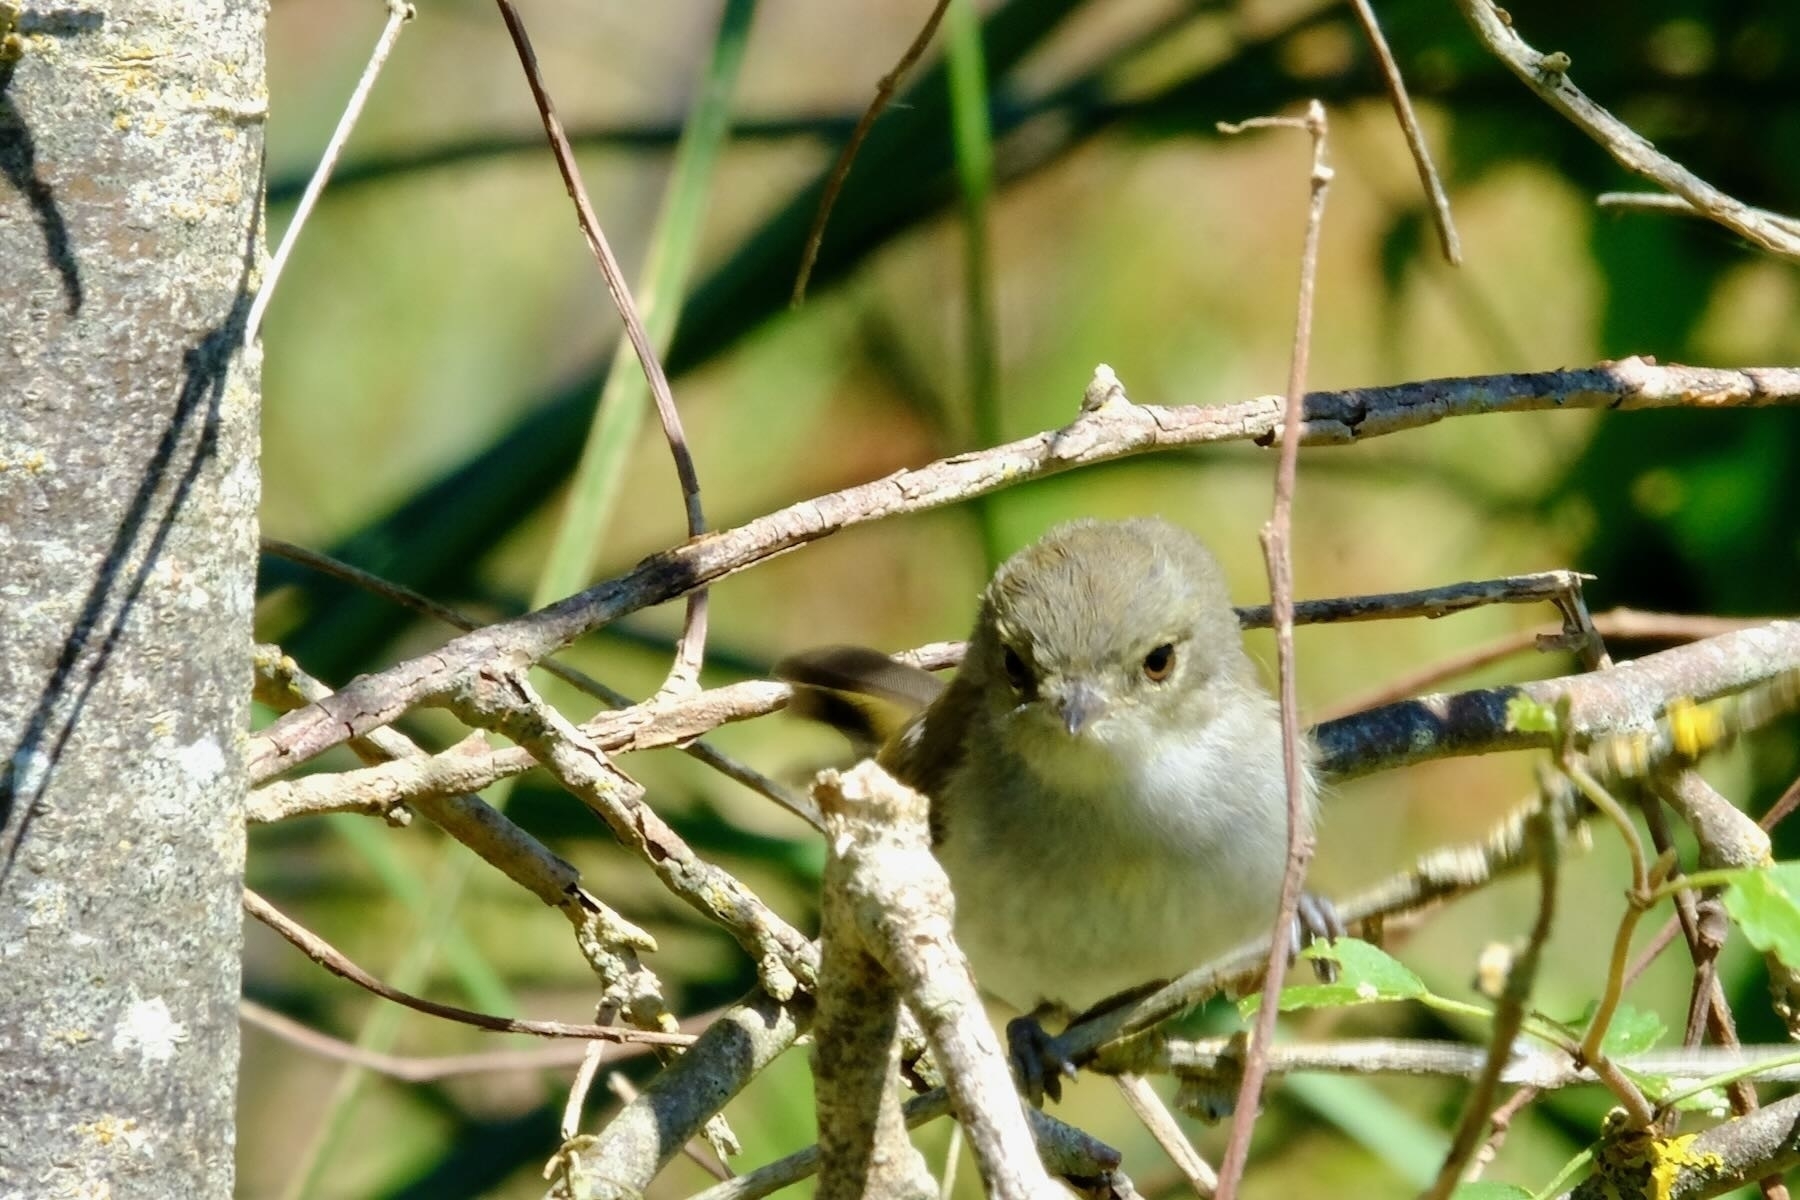 Riroriro grey warbler on a branch. 